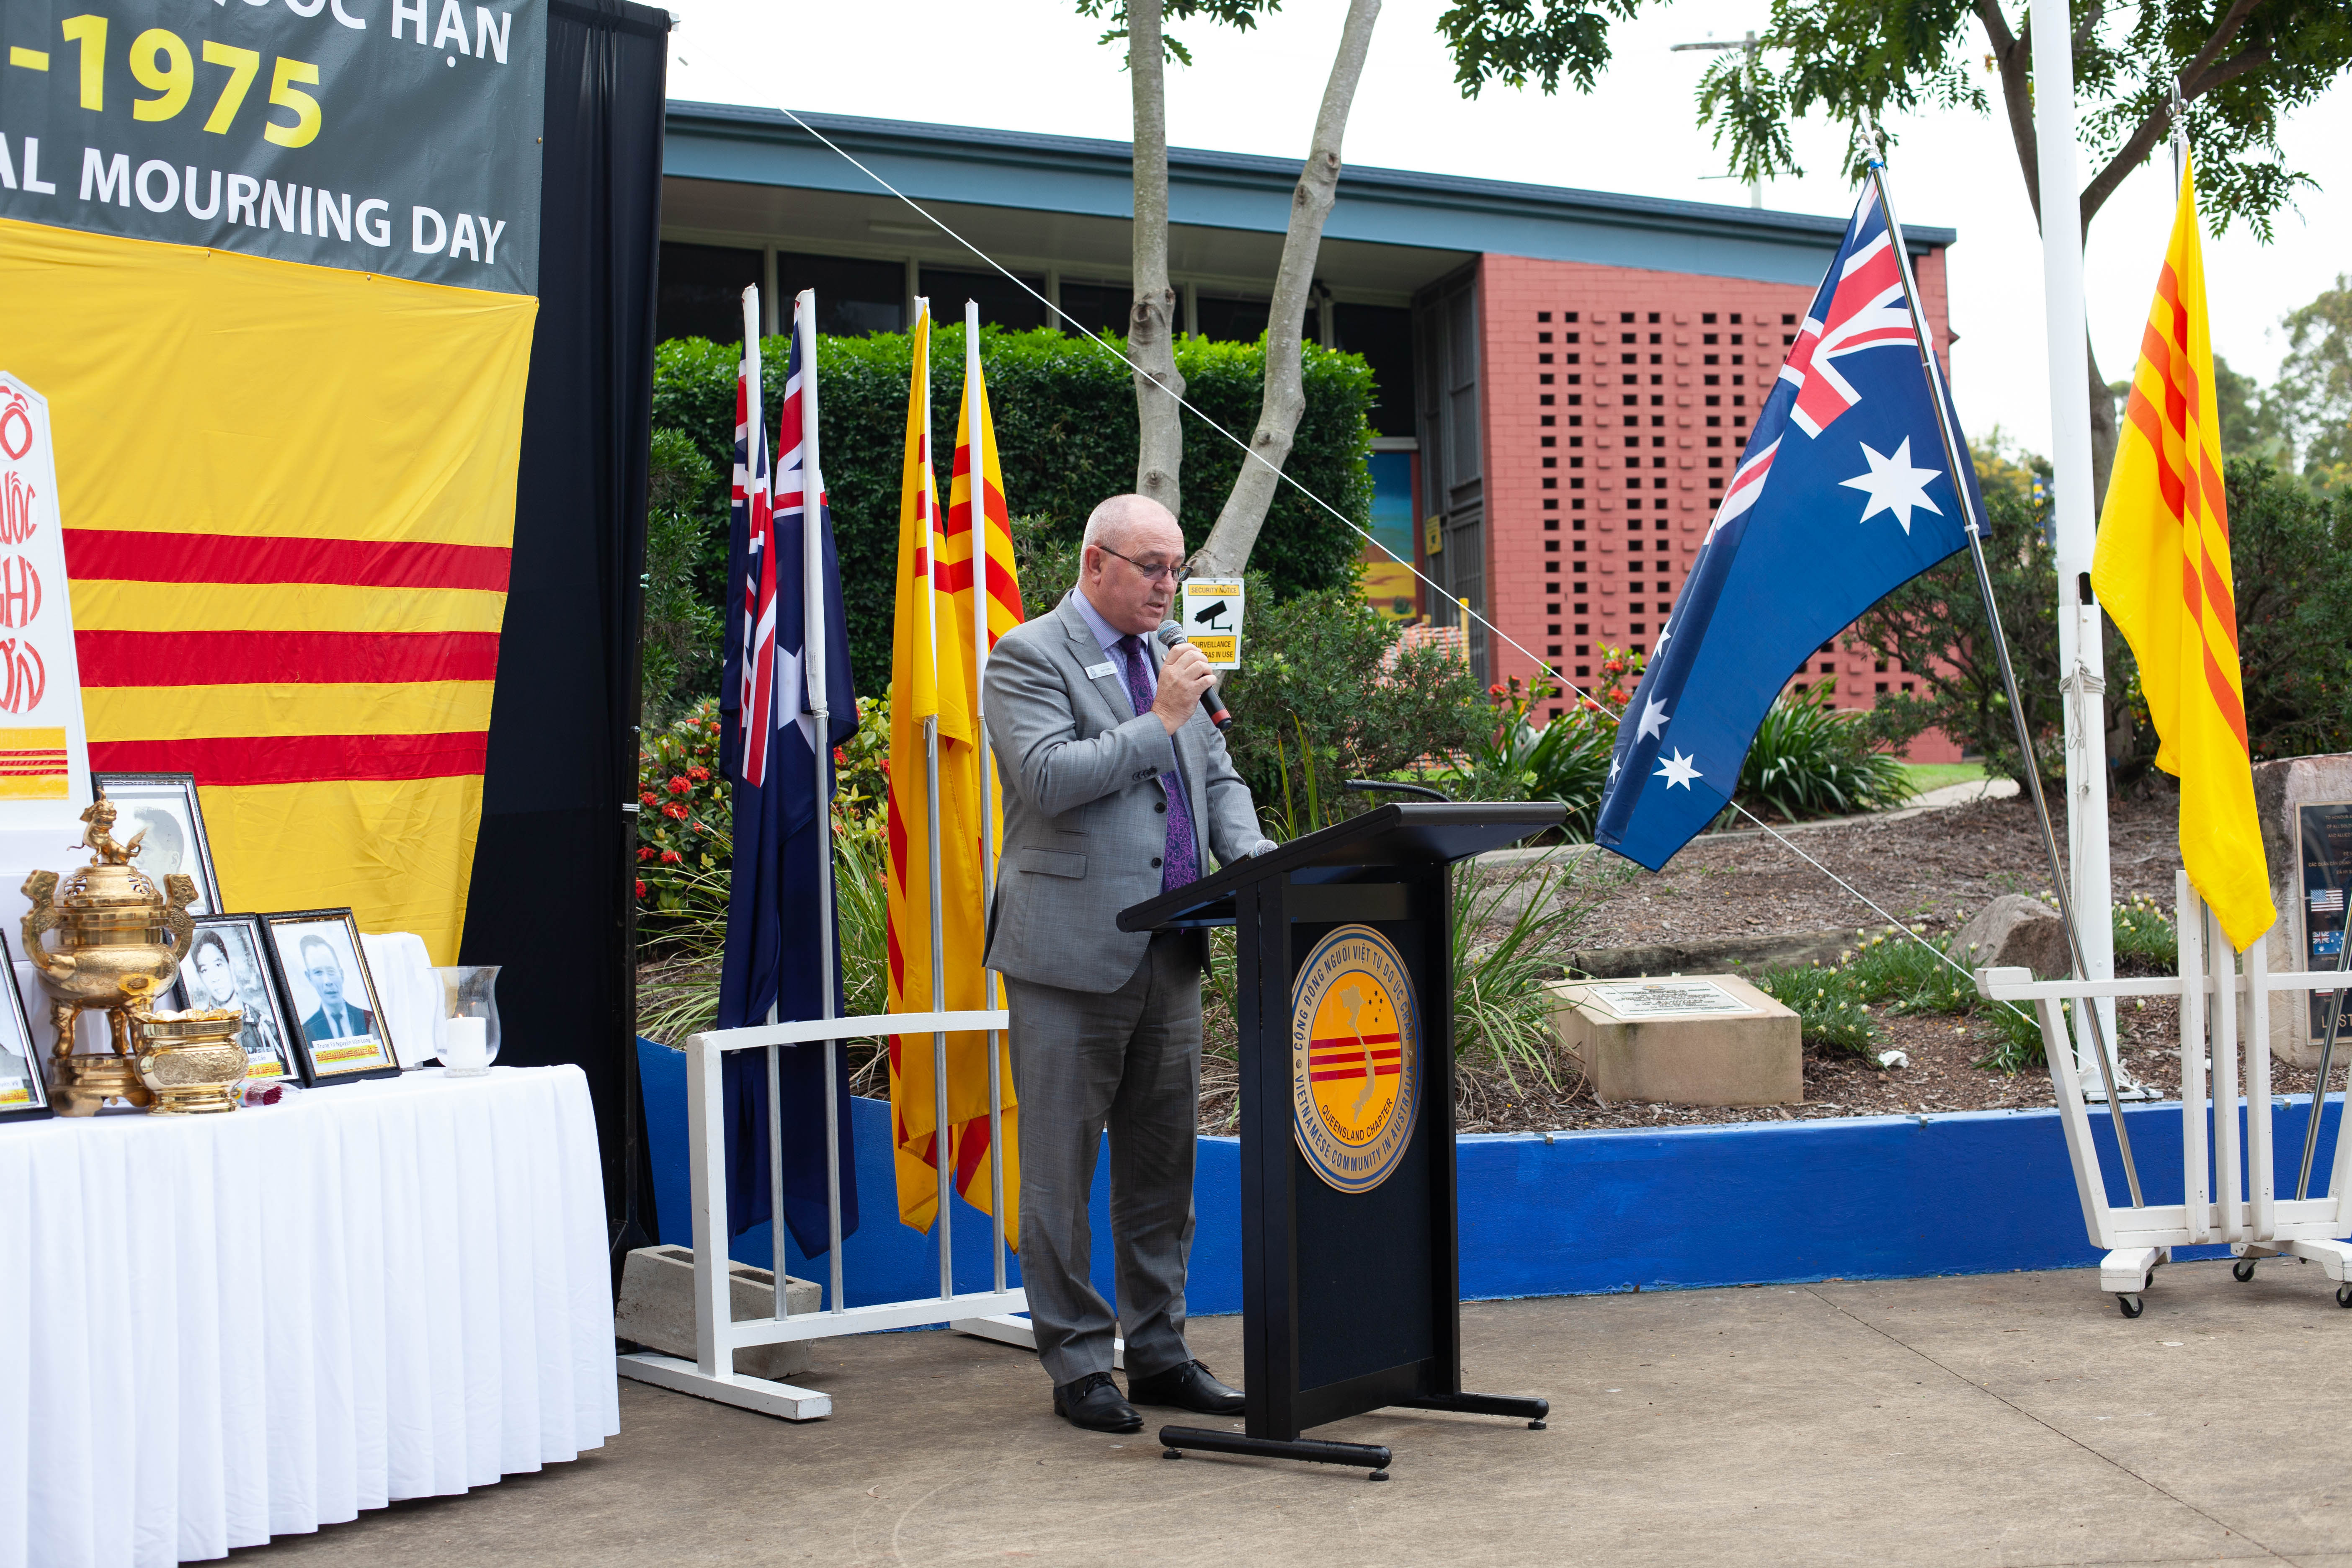 RSL Queensland President Tony Ferris speaking at Vietnam Mourning Day ceremony